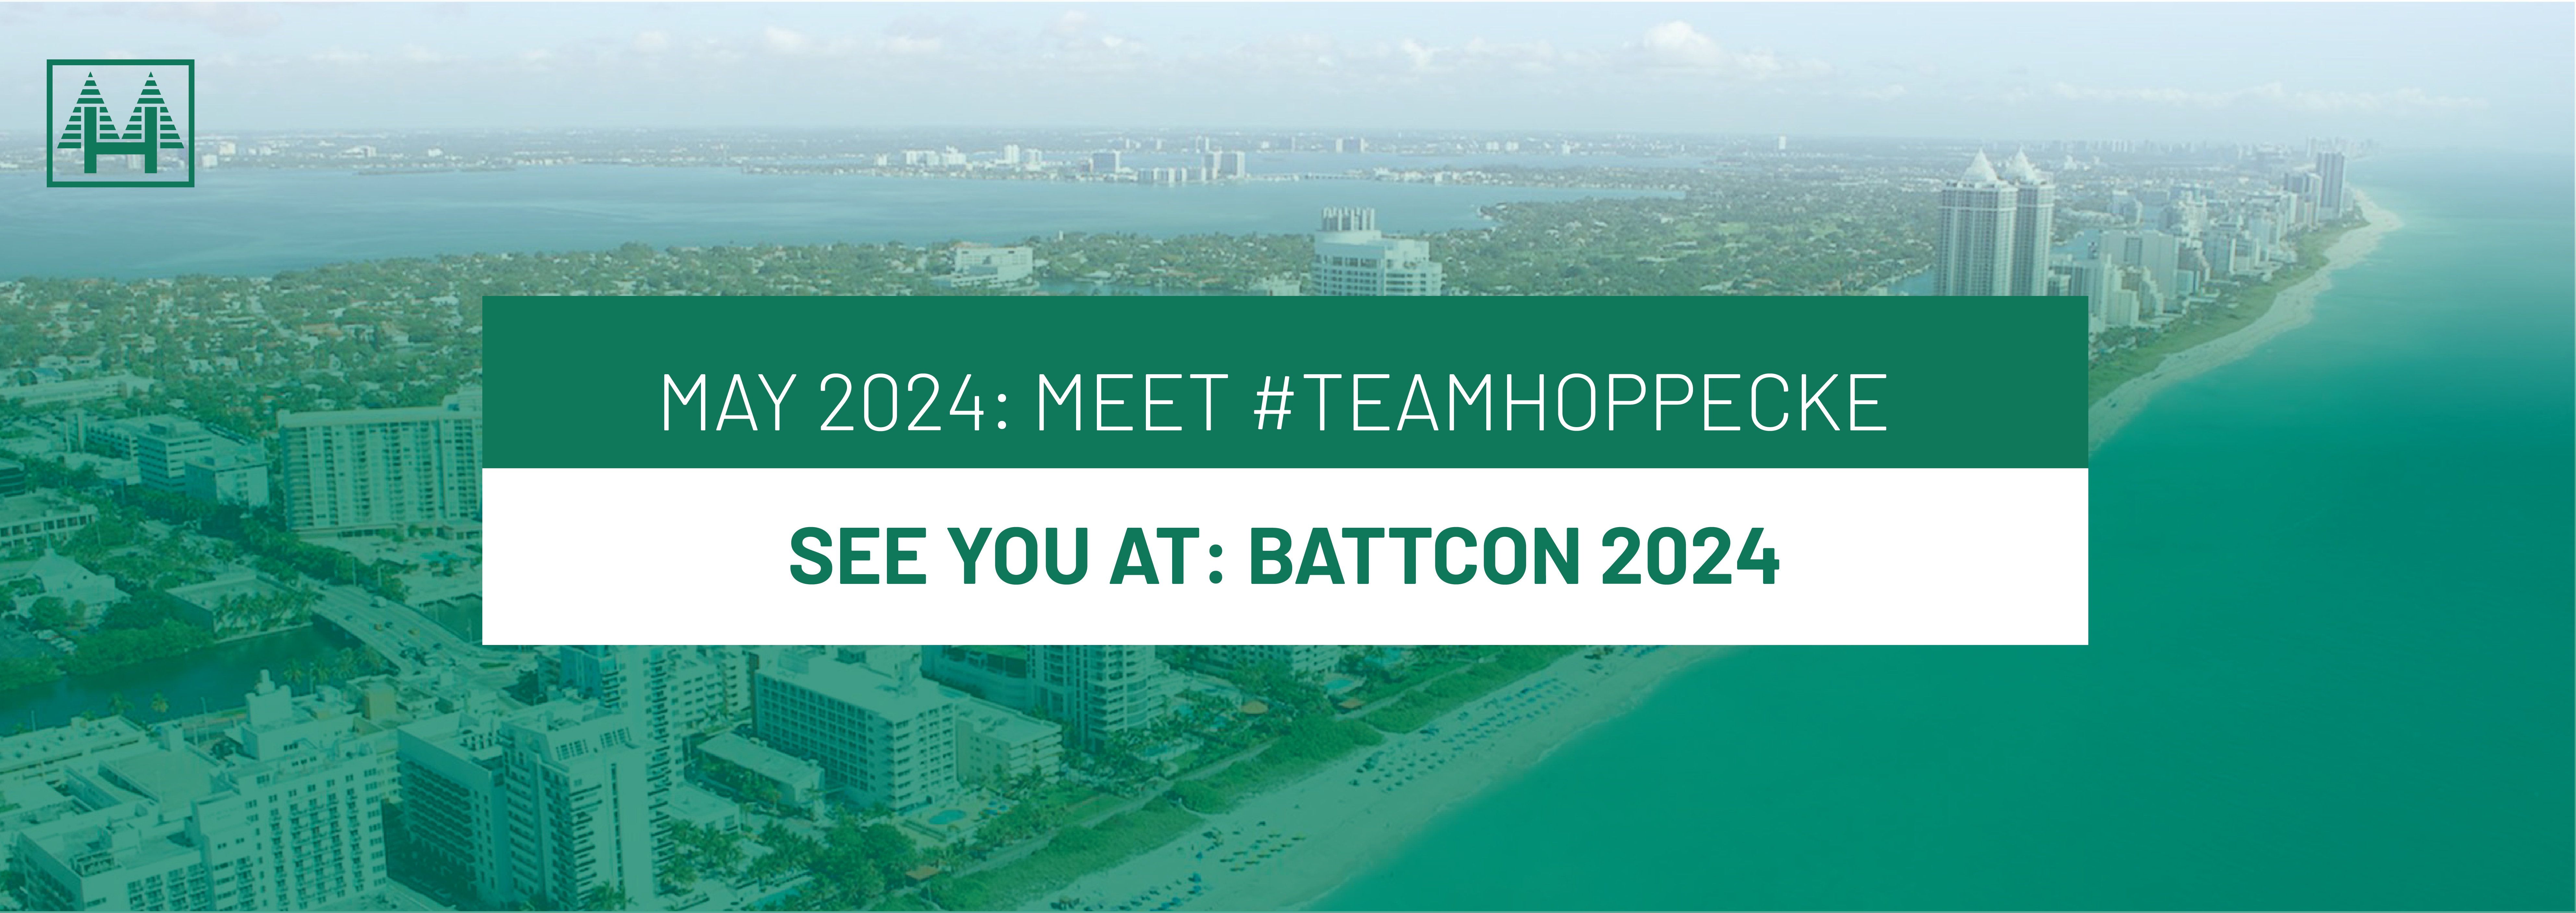 BATTCON 2024 is just around the corner! - Wednesday, 01.05.2024